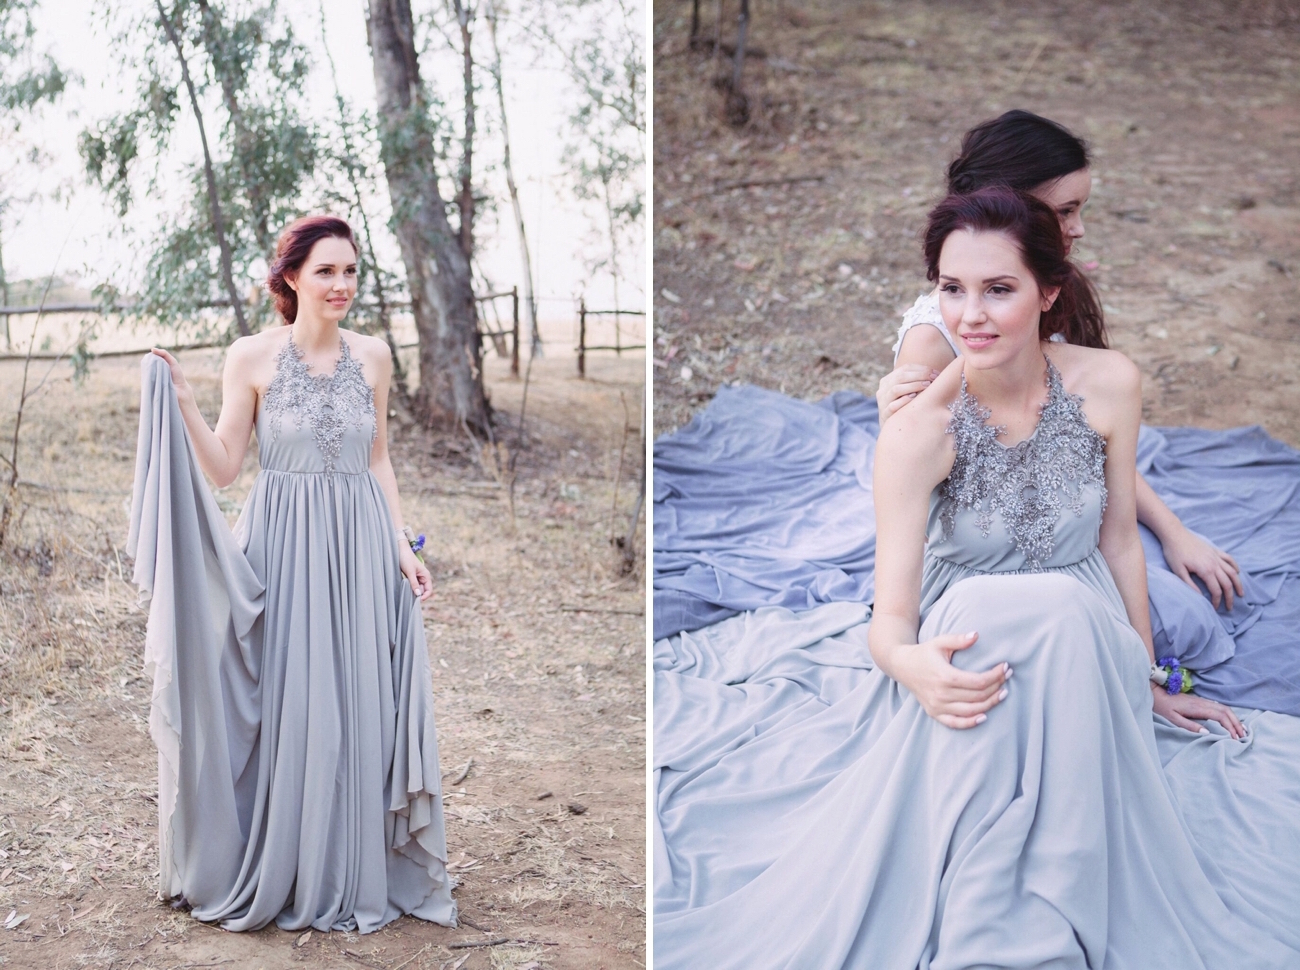 Indigo & Grey Rustic Wedding Inspiration | Credit: Dust & Dreams Photography